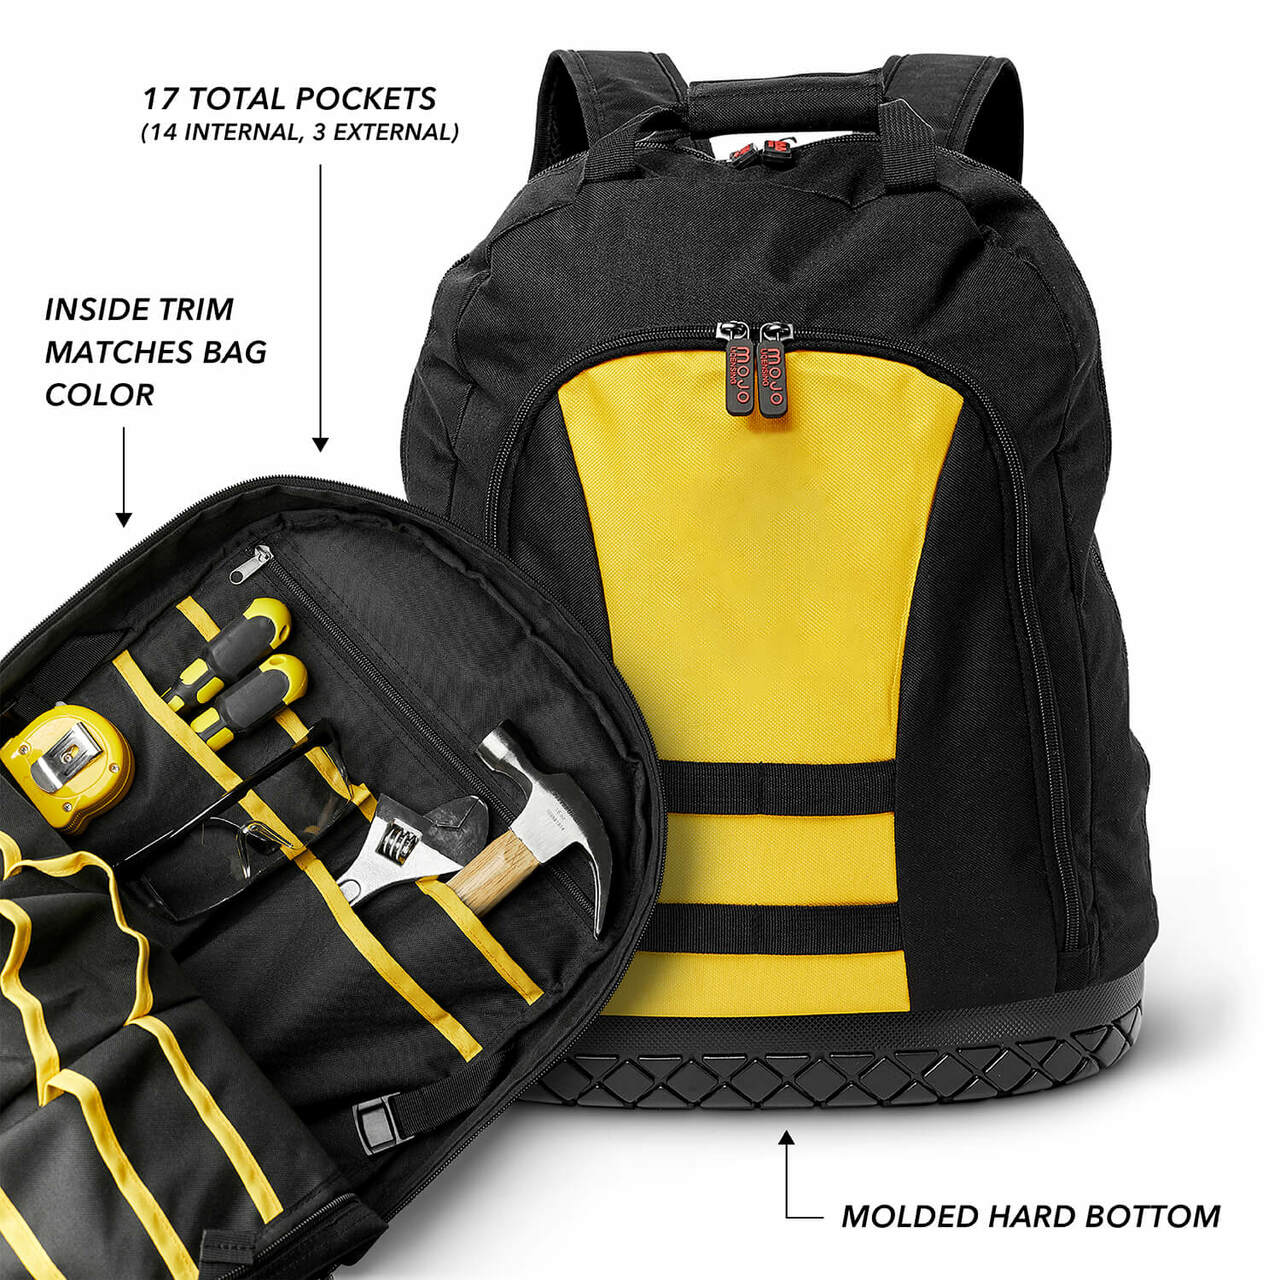 Georgia Tech Yellow Jackets Tool Bag Backpack